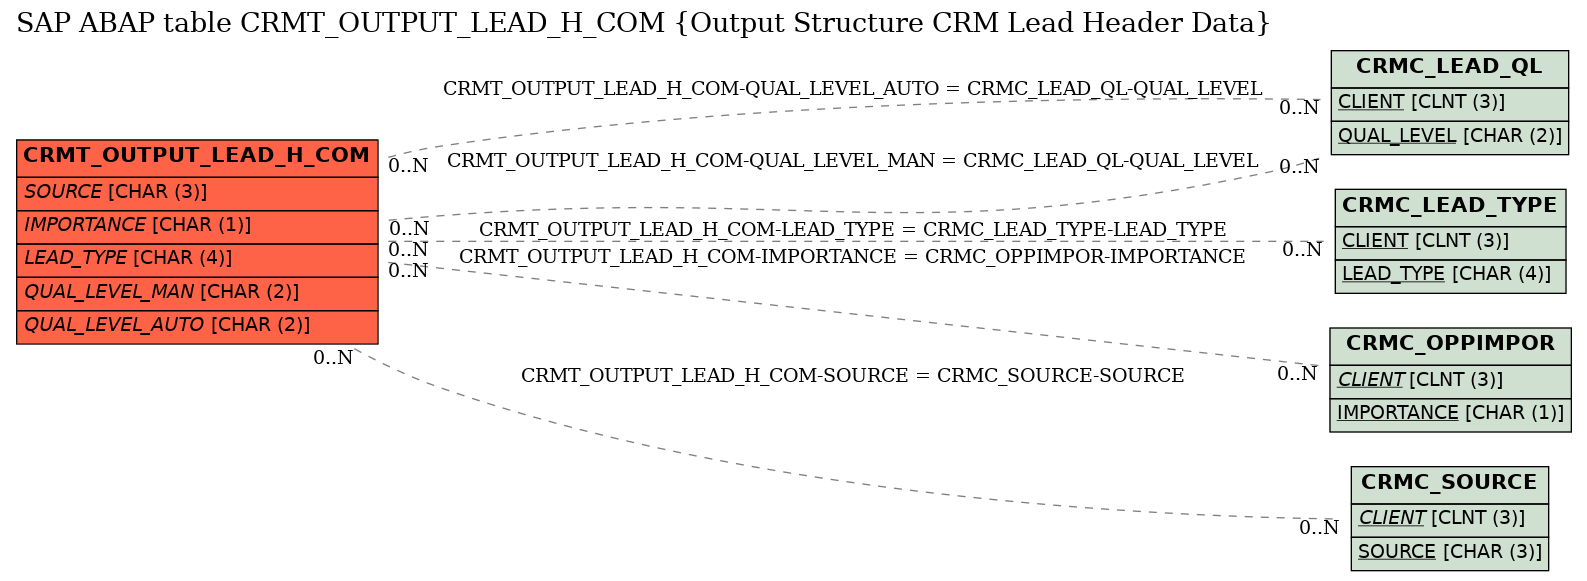 E-R Diagram for table CRMT_OUTPUT_LEAD_H_COM (Output Structure CRM Lead Header Data)